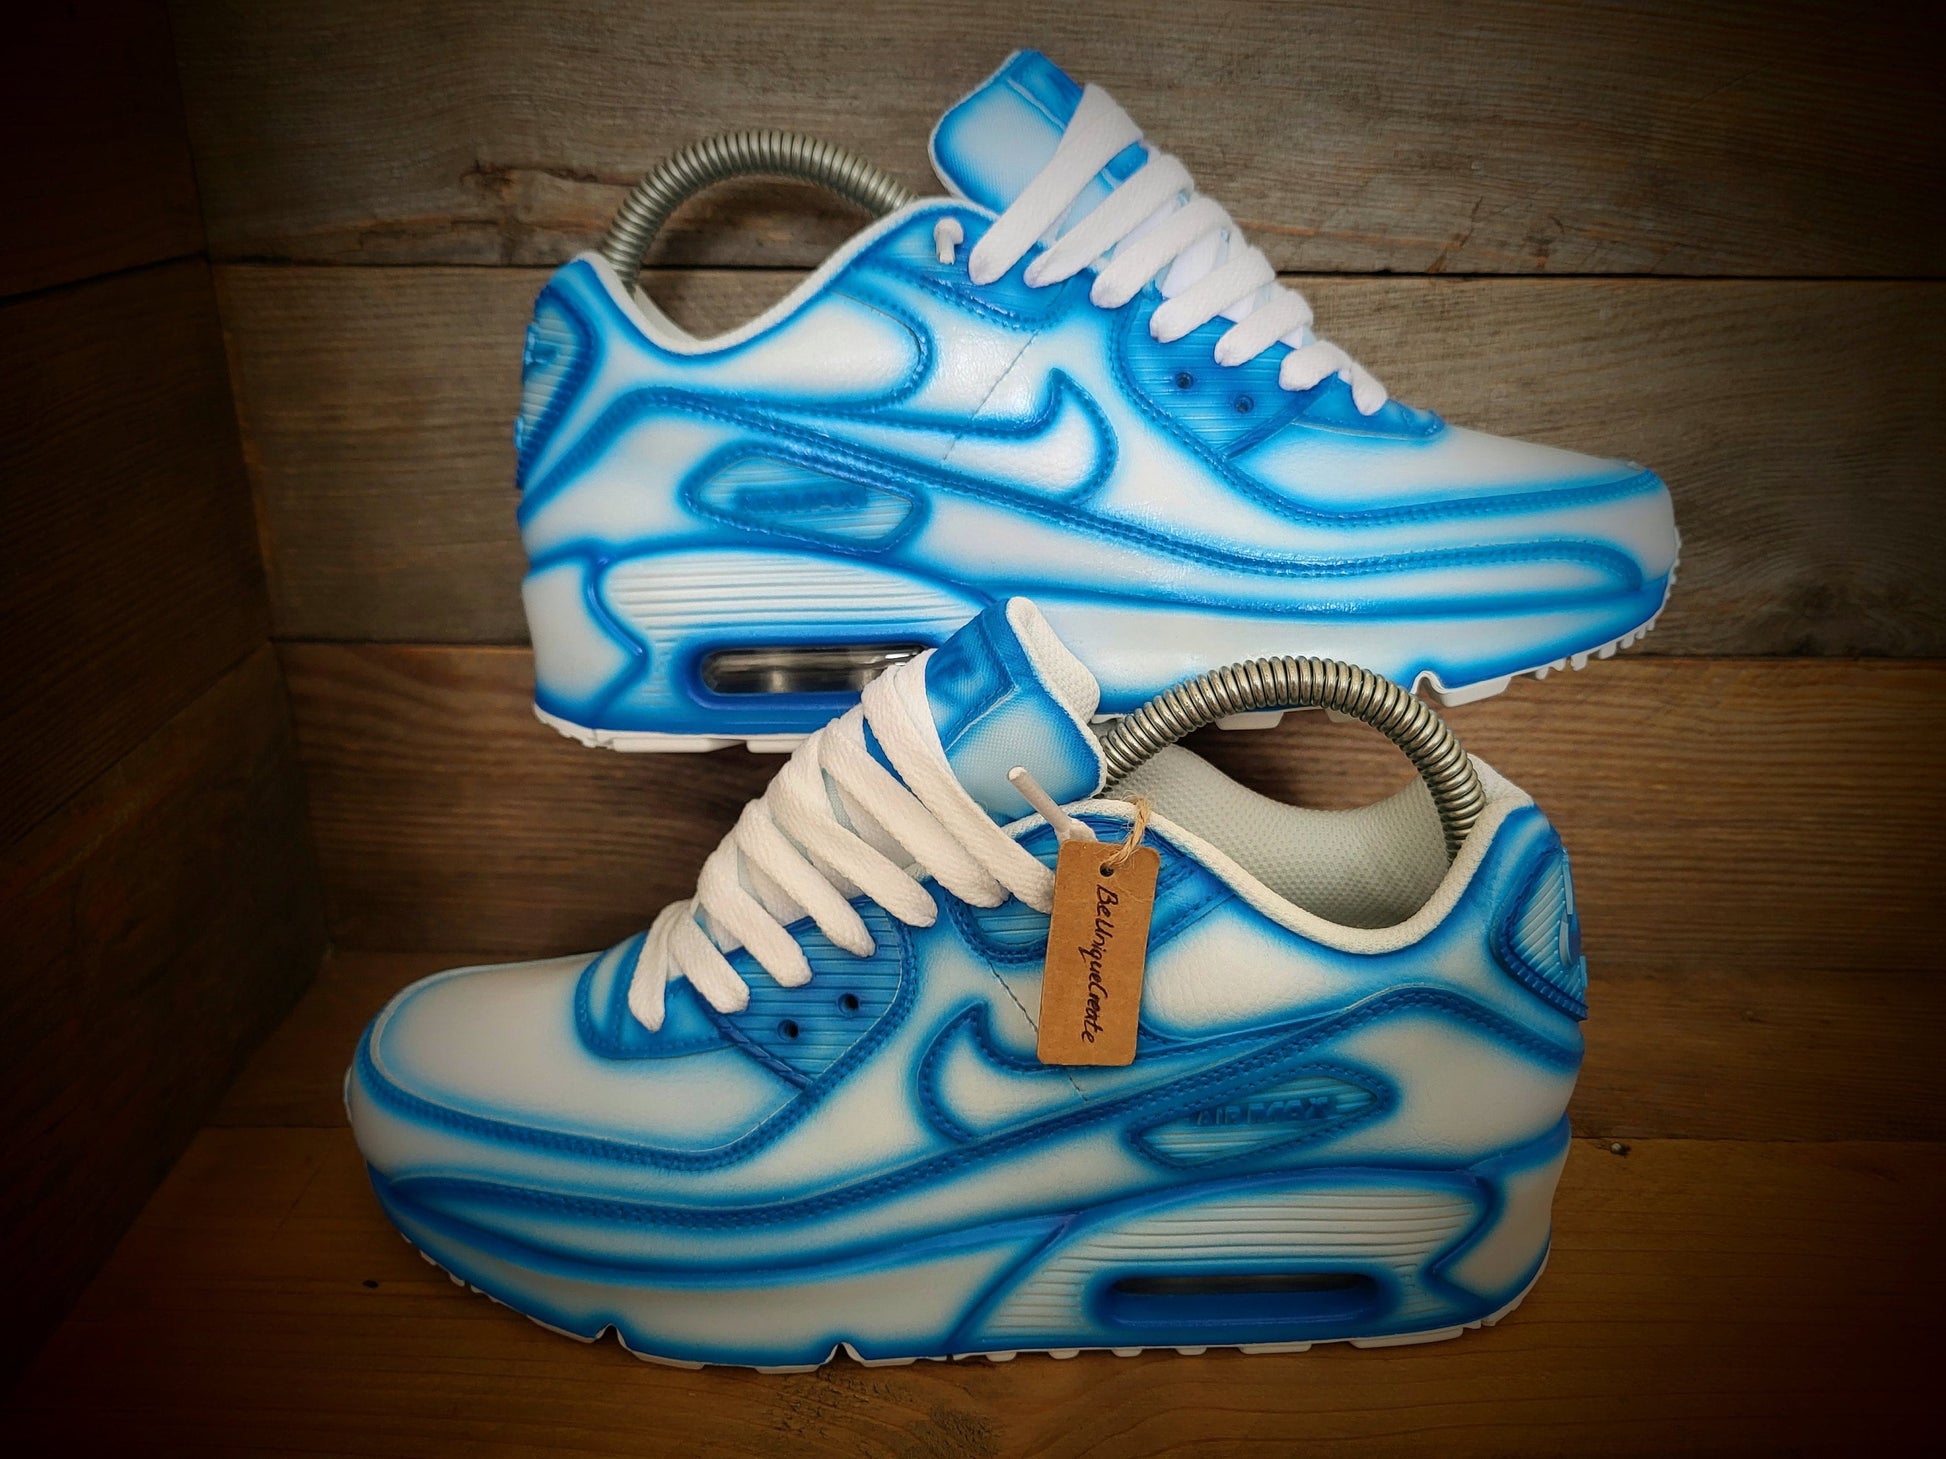 Custom Painted Air Max 90/Sneakers/Shoes/Kicks/Premium/Personalised/Blue Cartoon